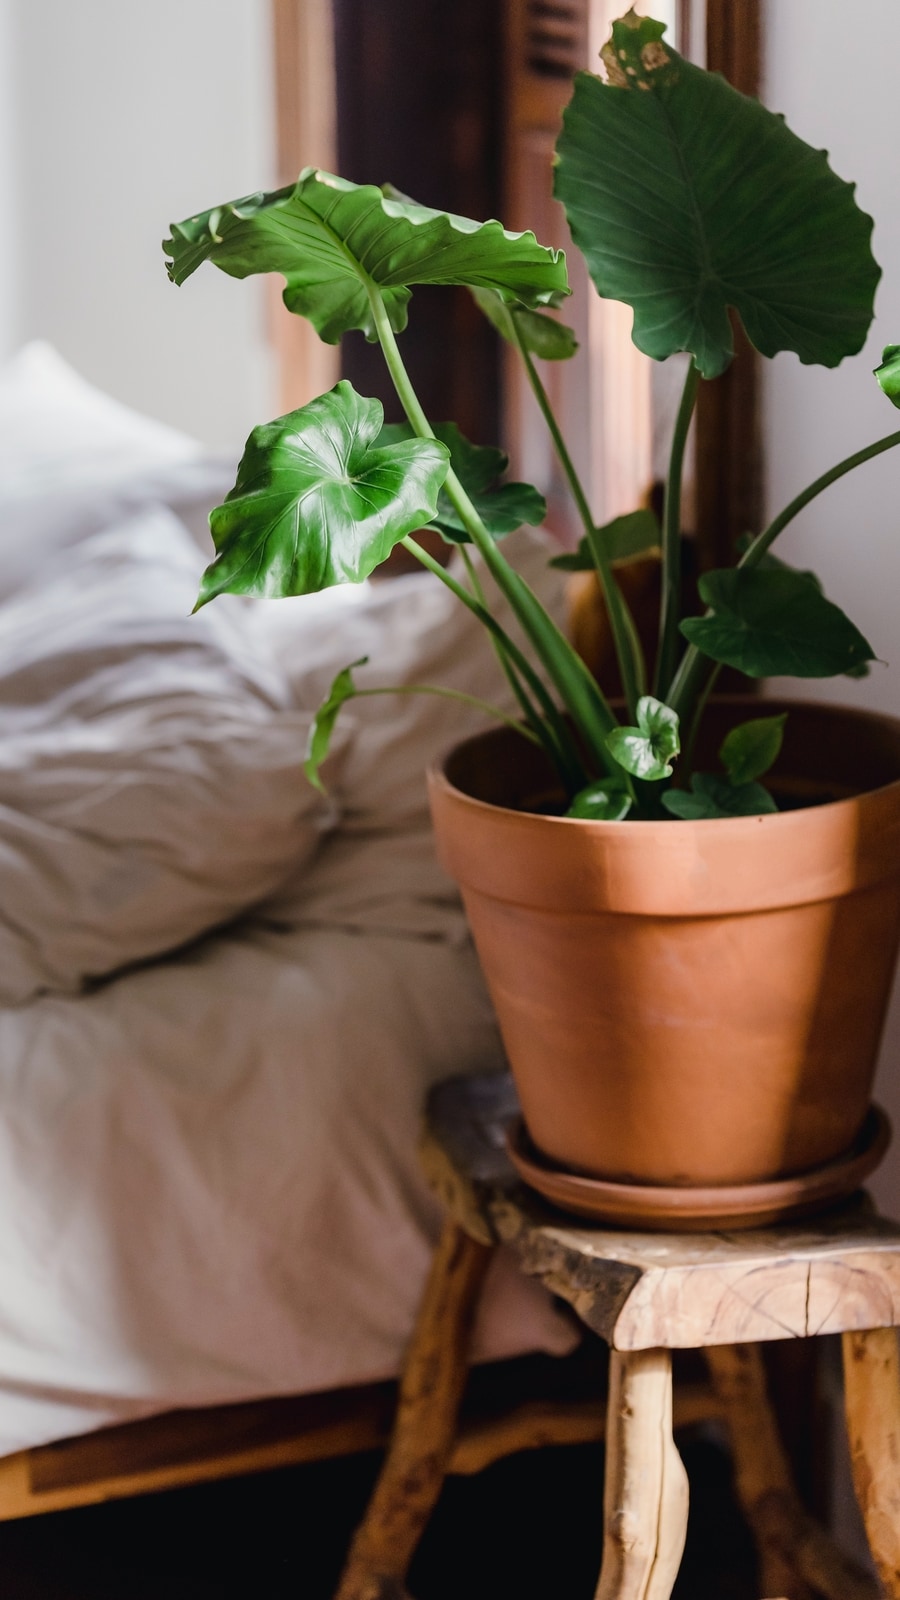 5 Bedroom Plants To Promote Better Sleep